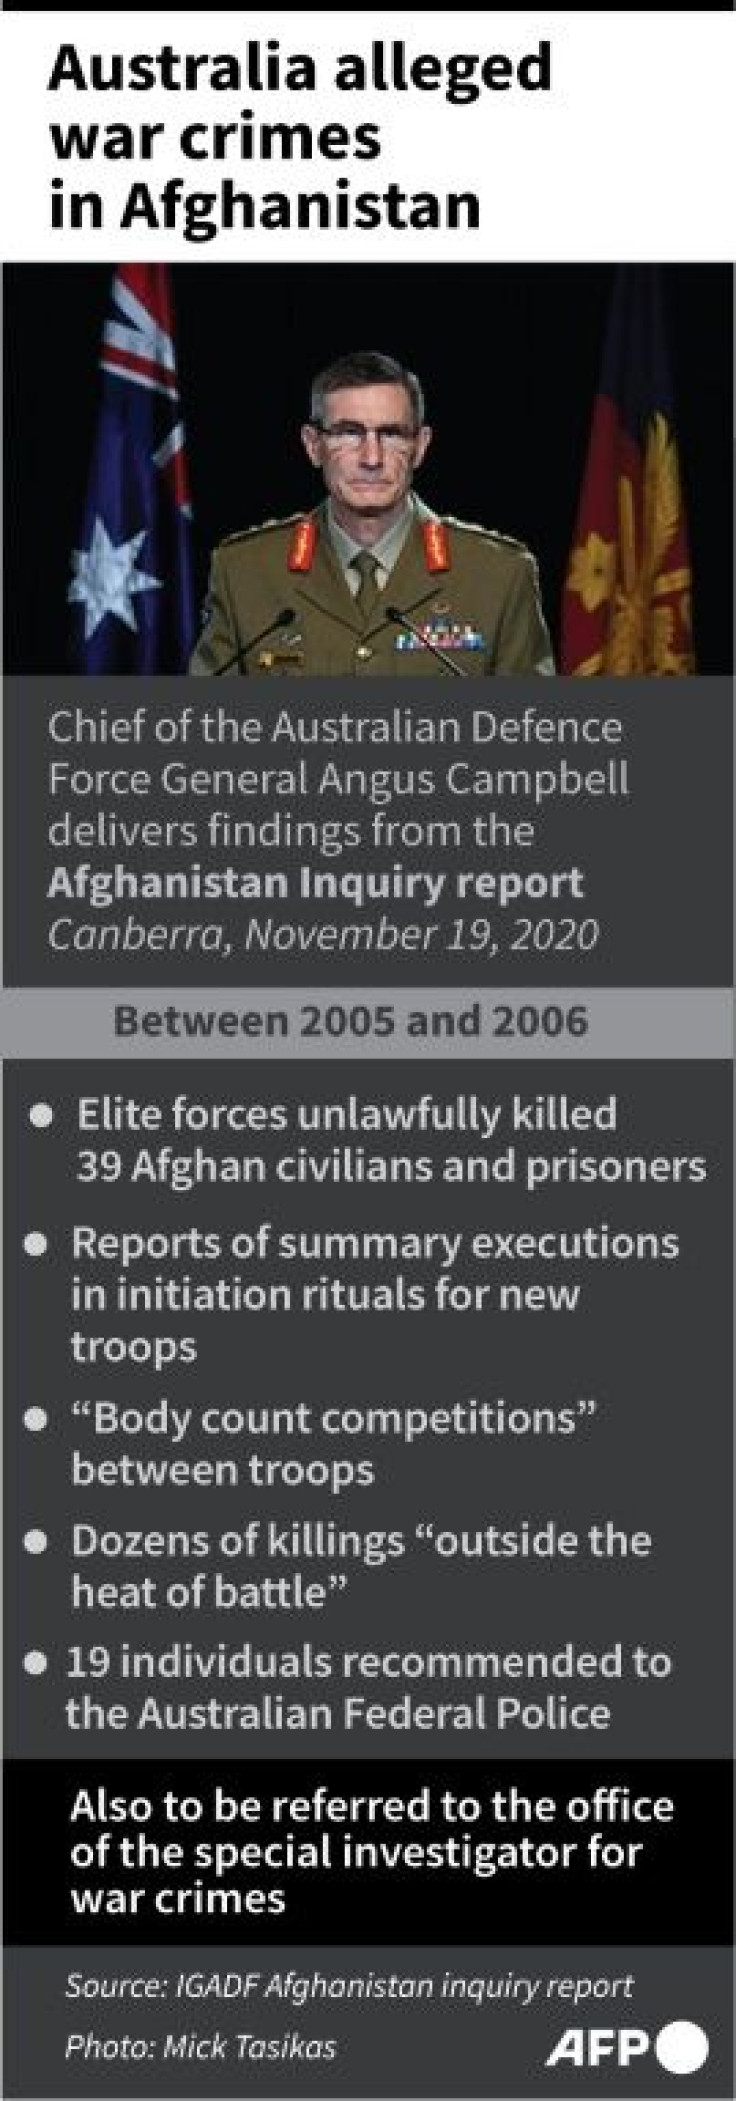 Australia alleged war crimes in Afghanistan